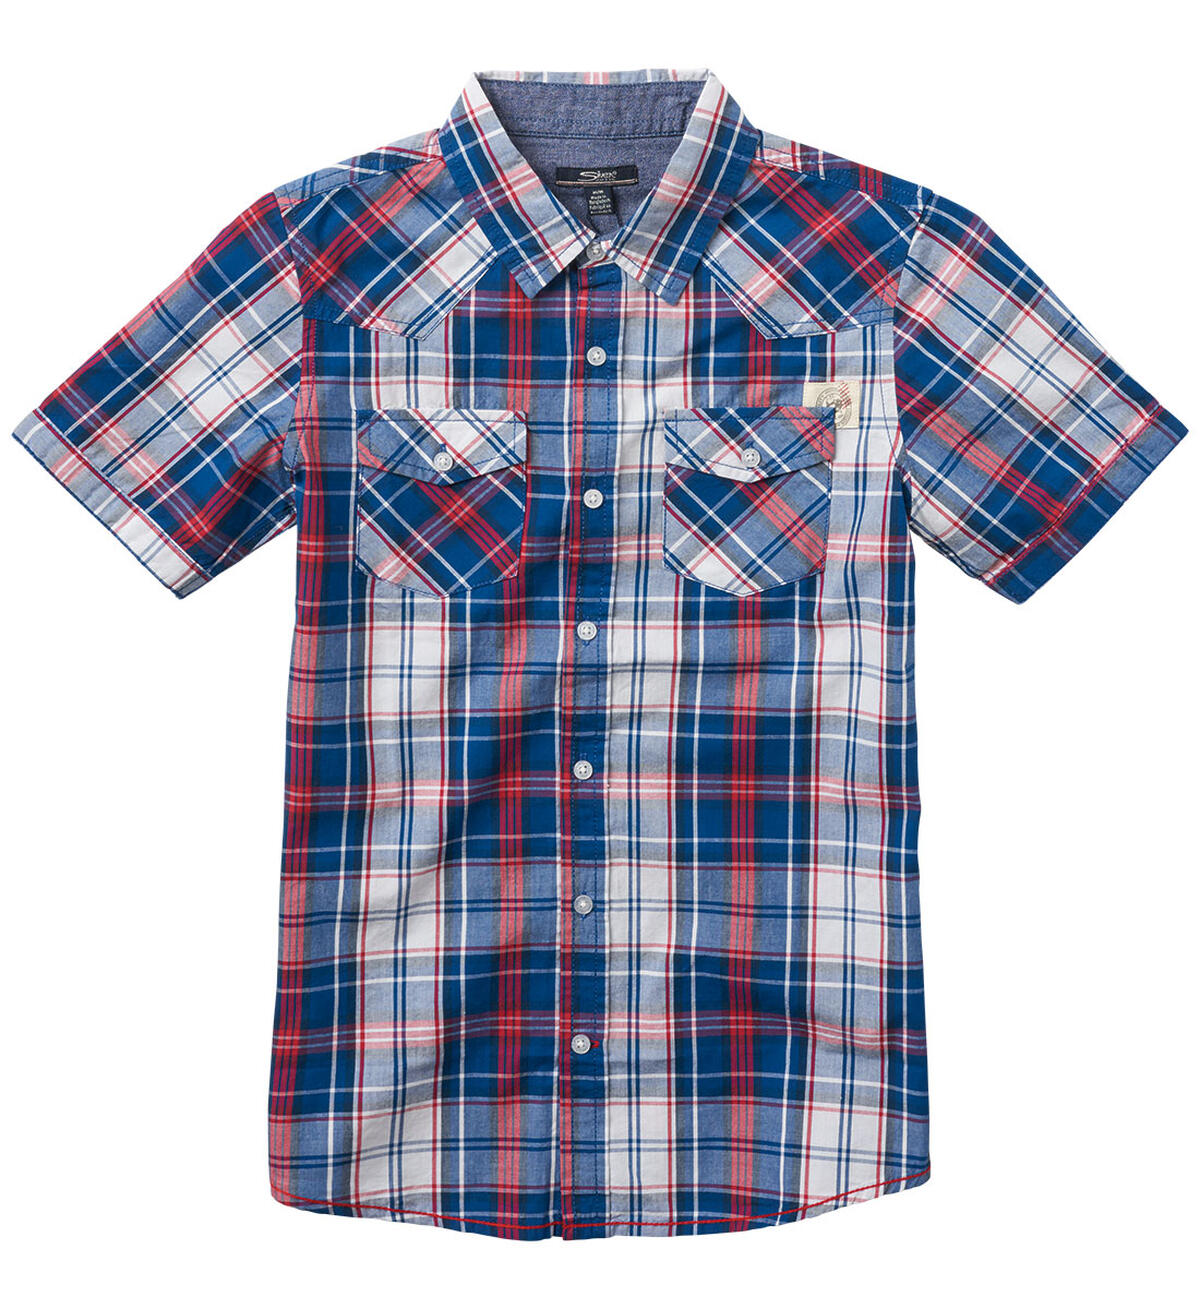 Short-Sleeve Plaid Shirt (4-7), , hi-res image number 0}